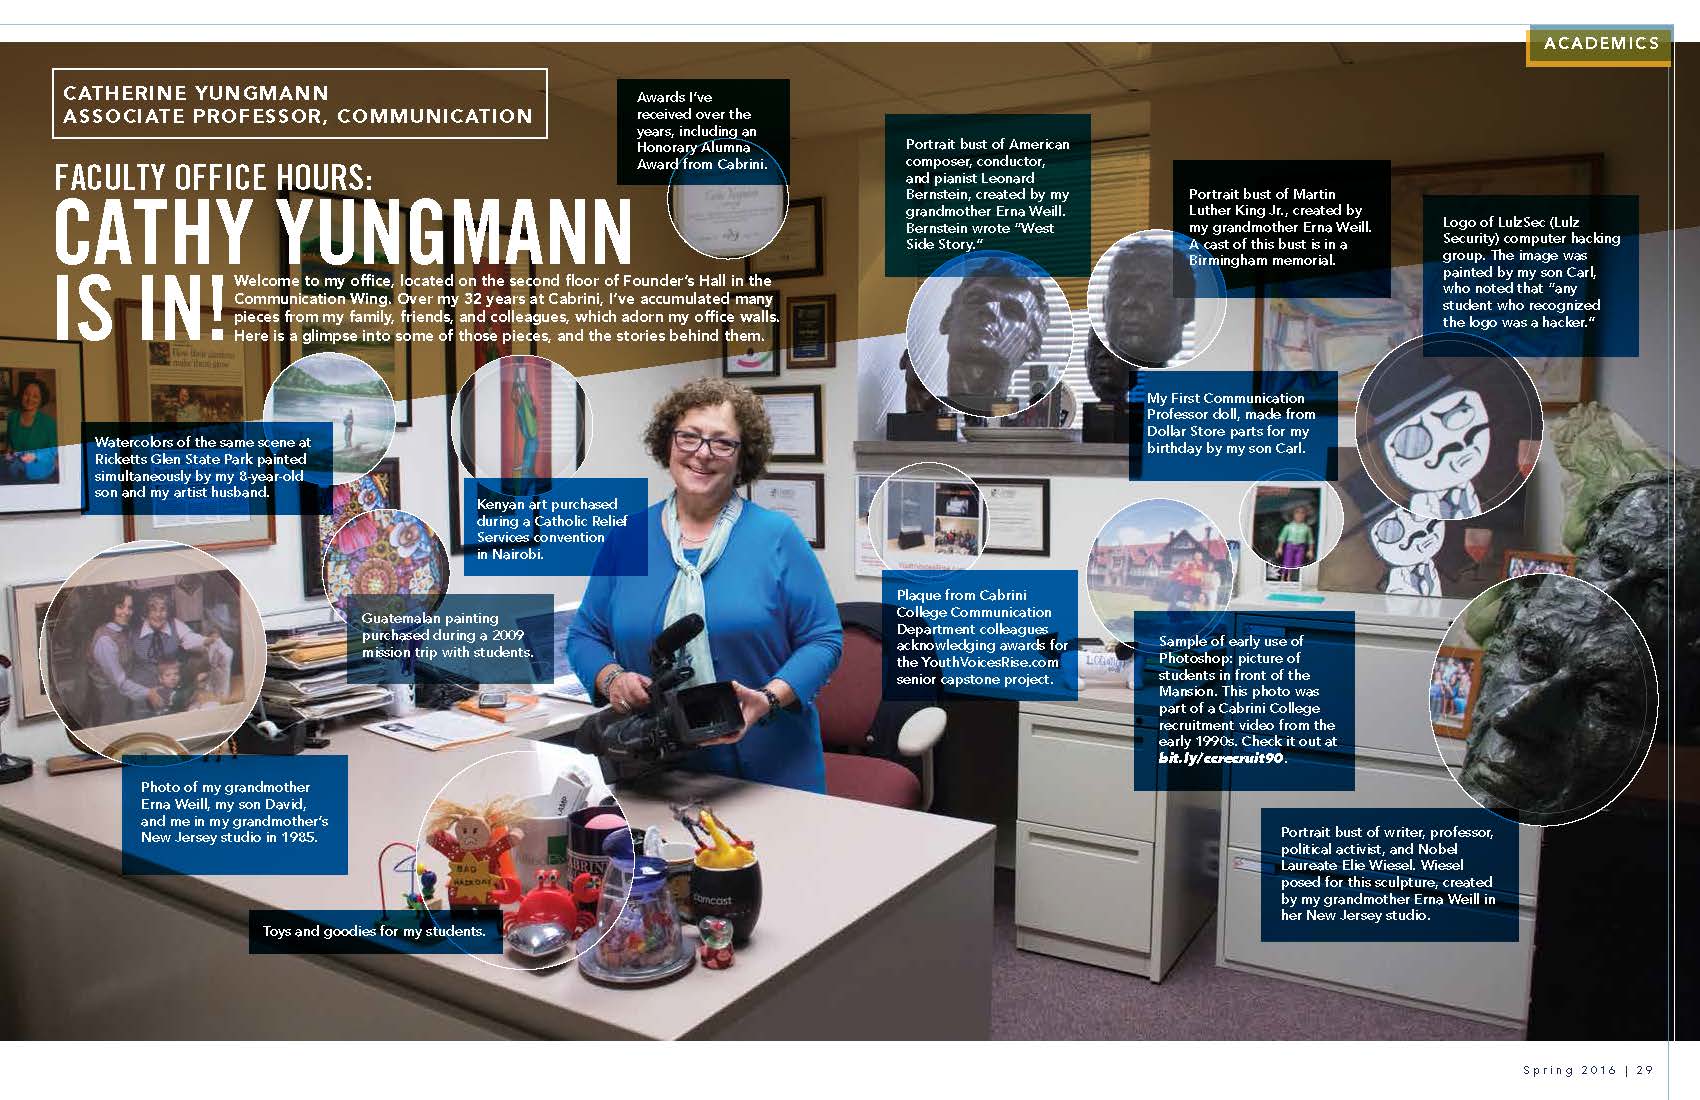 Professor Cathy Yungmann in her office